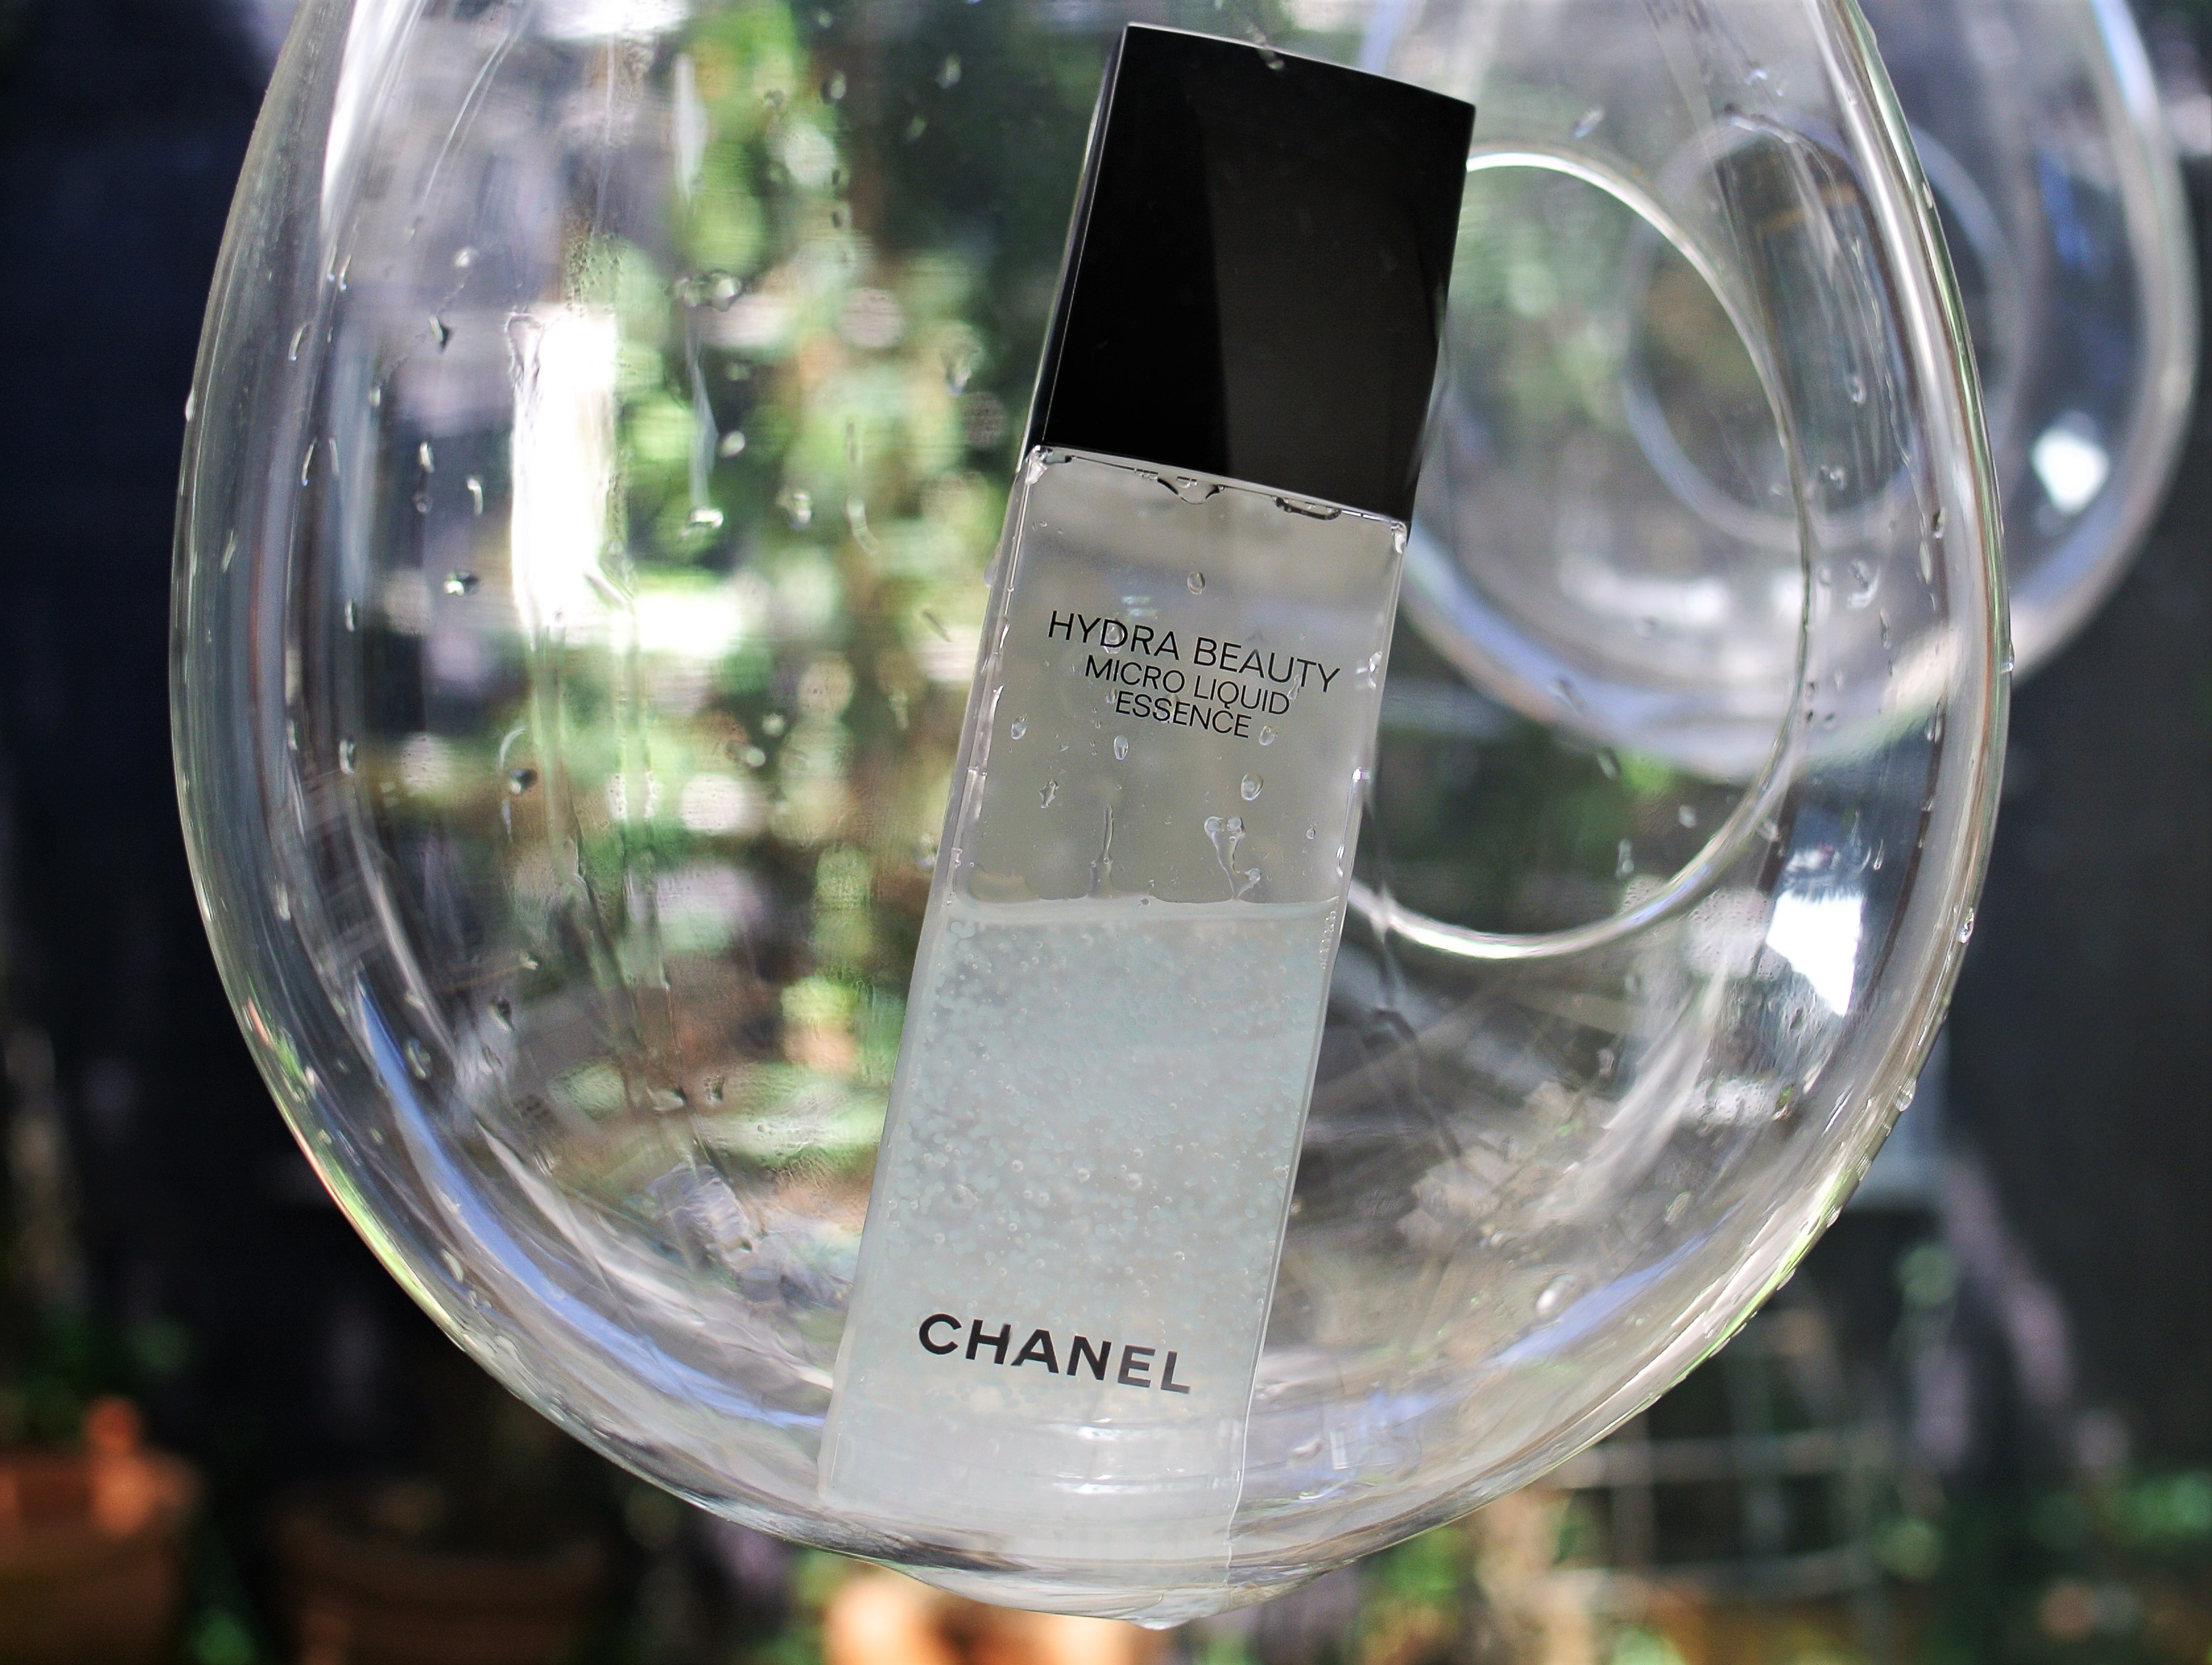 Chanel Hydra Beauty Micro Liquid Essence Review